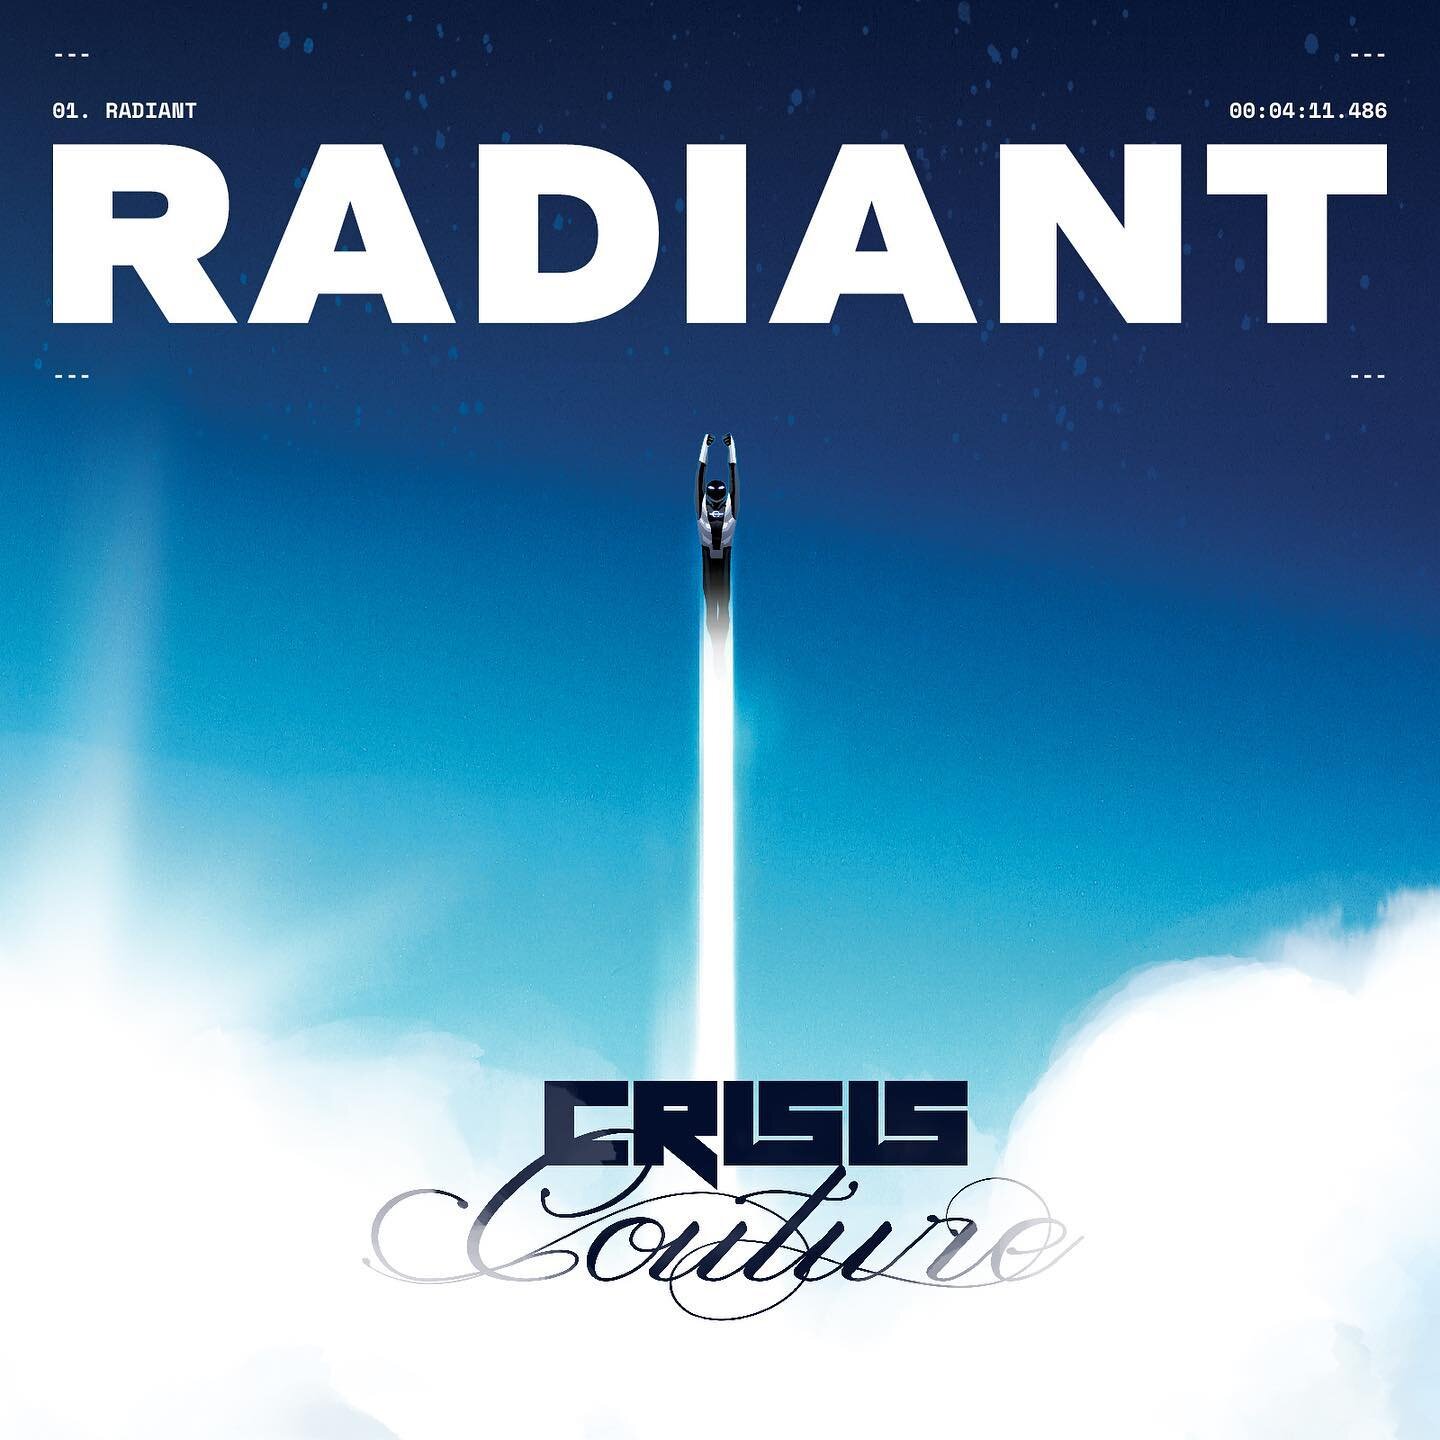 2/1 - New single drops #RADIANT! - @radiantblk comic book drops 2/10!! #lifeisacrisis